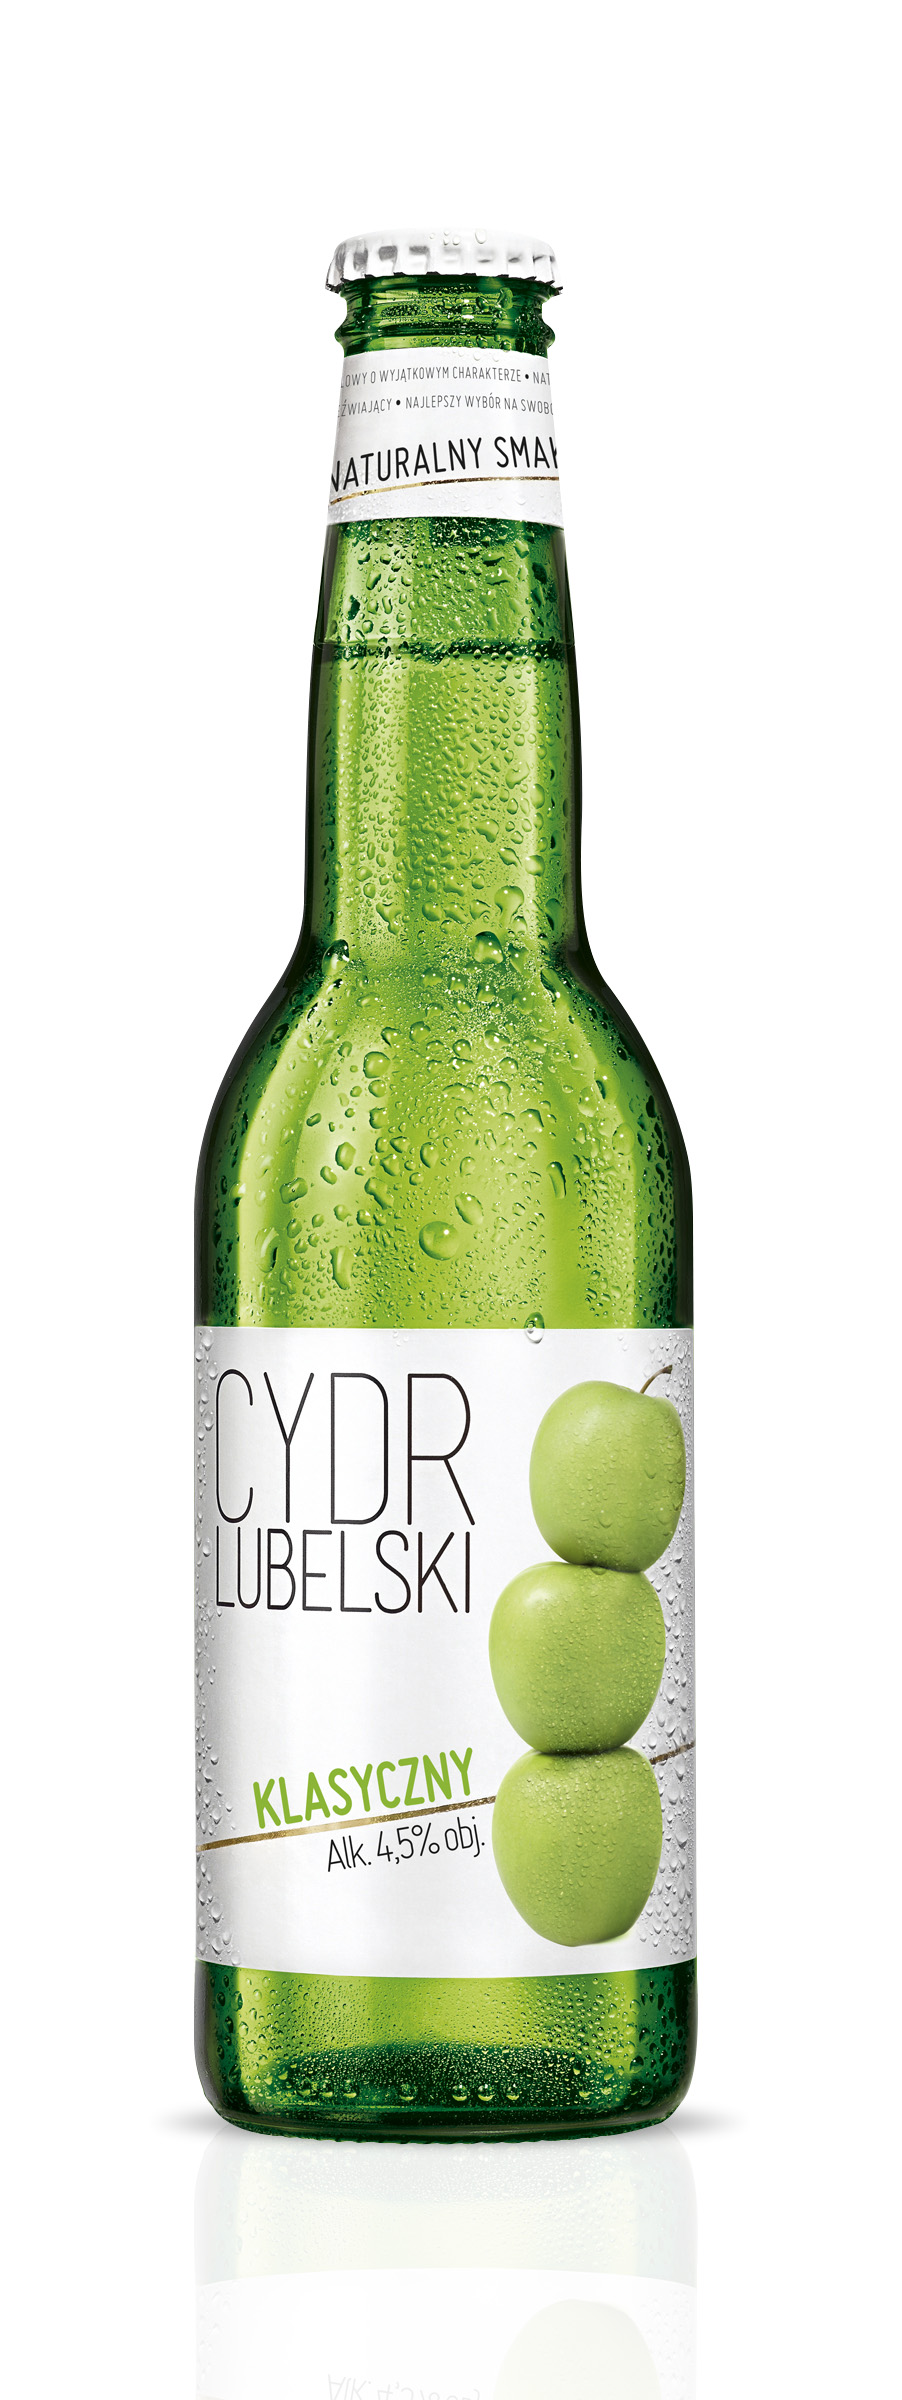 Cydr Lubelski苹果酒包装设计